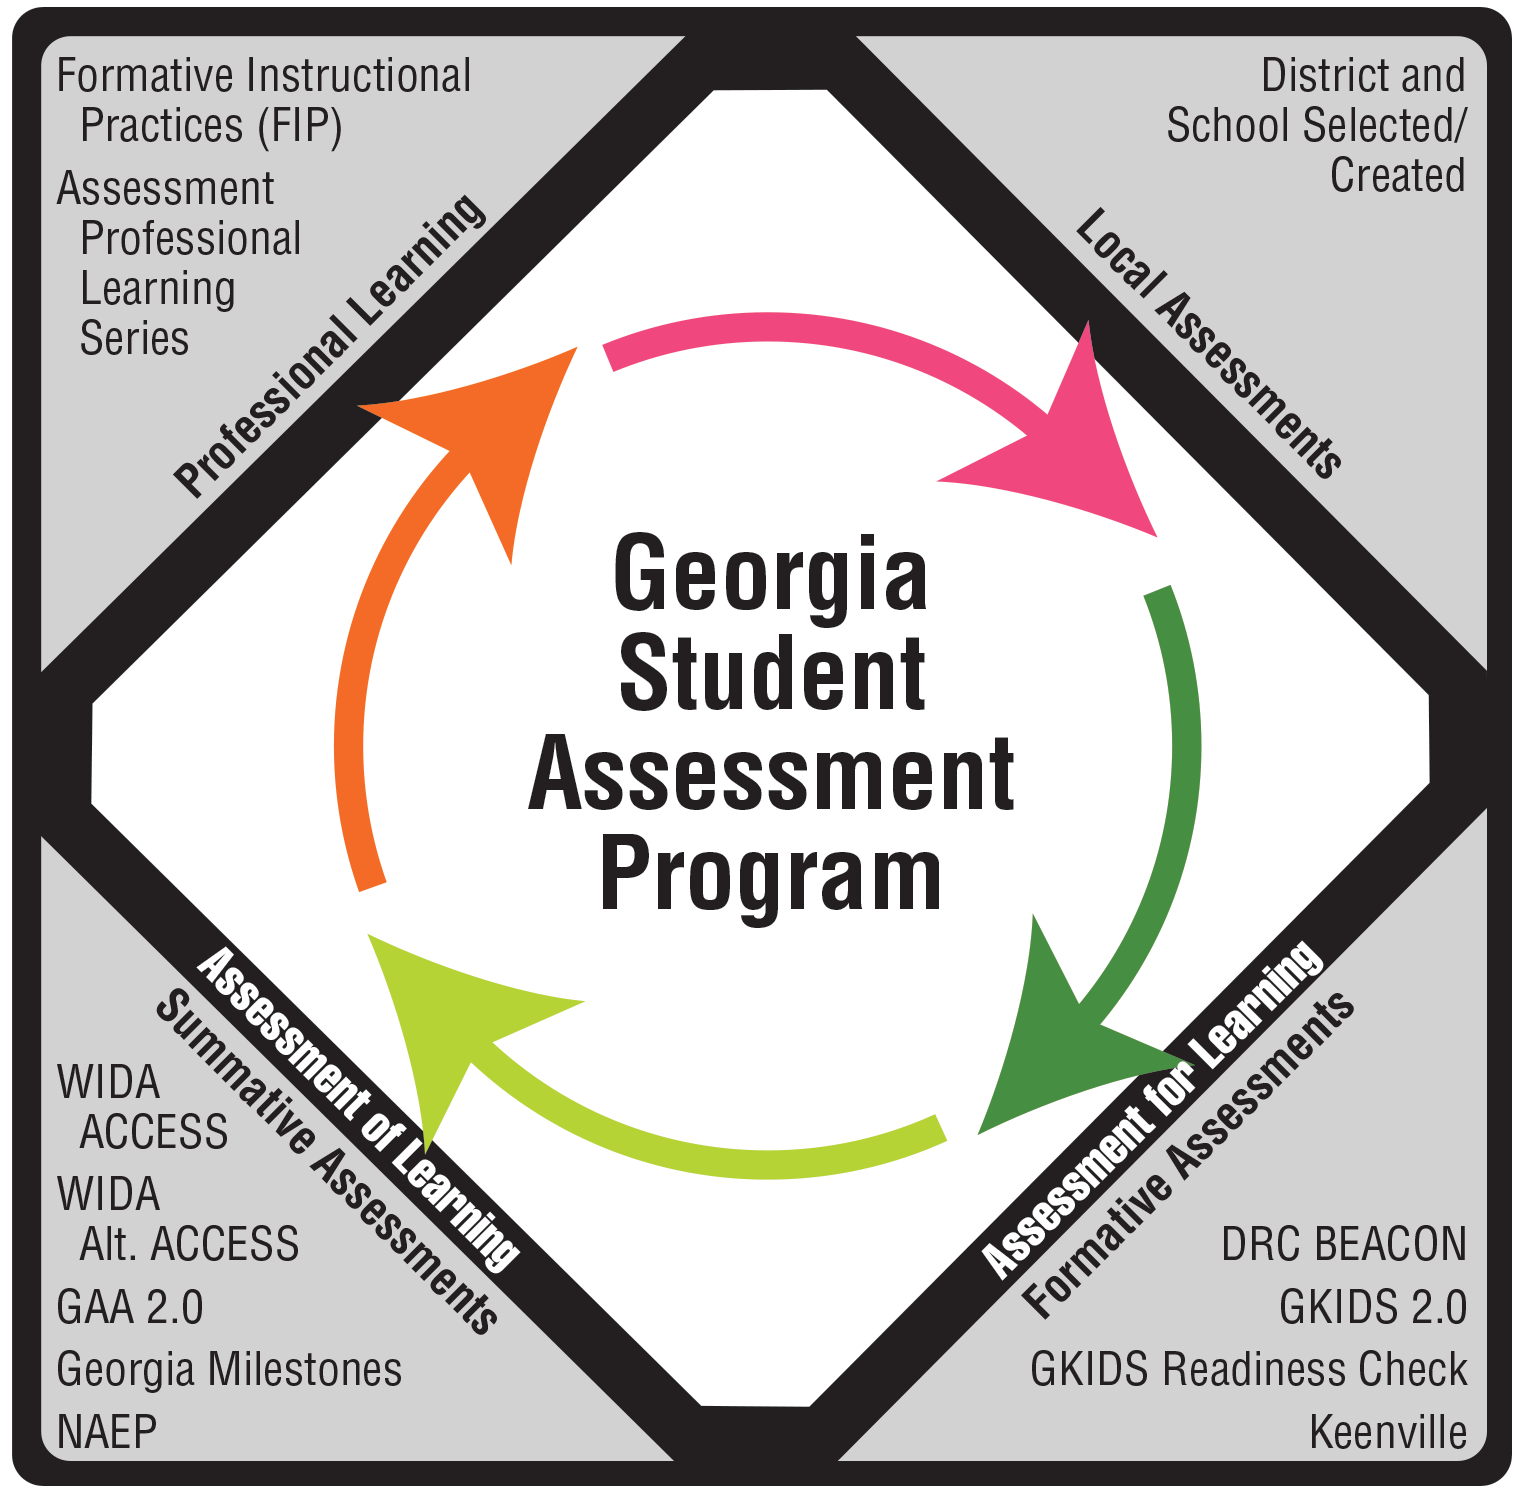 Georgia's Student Assessment Program